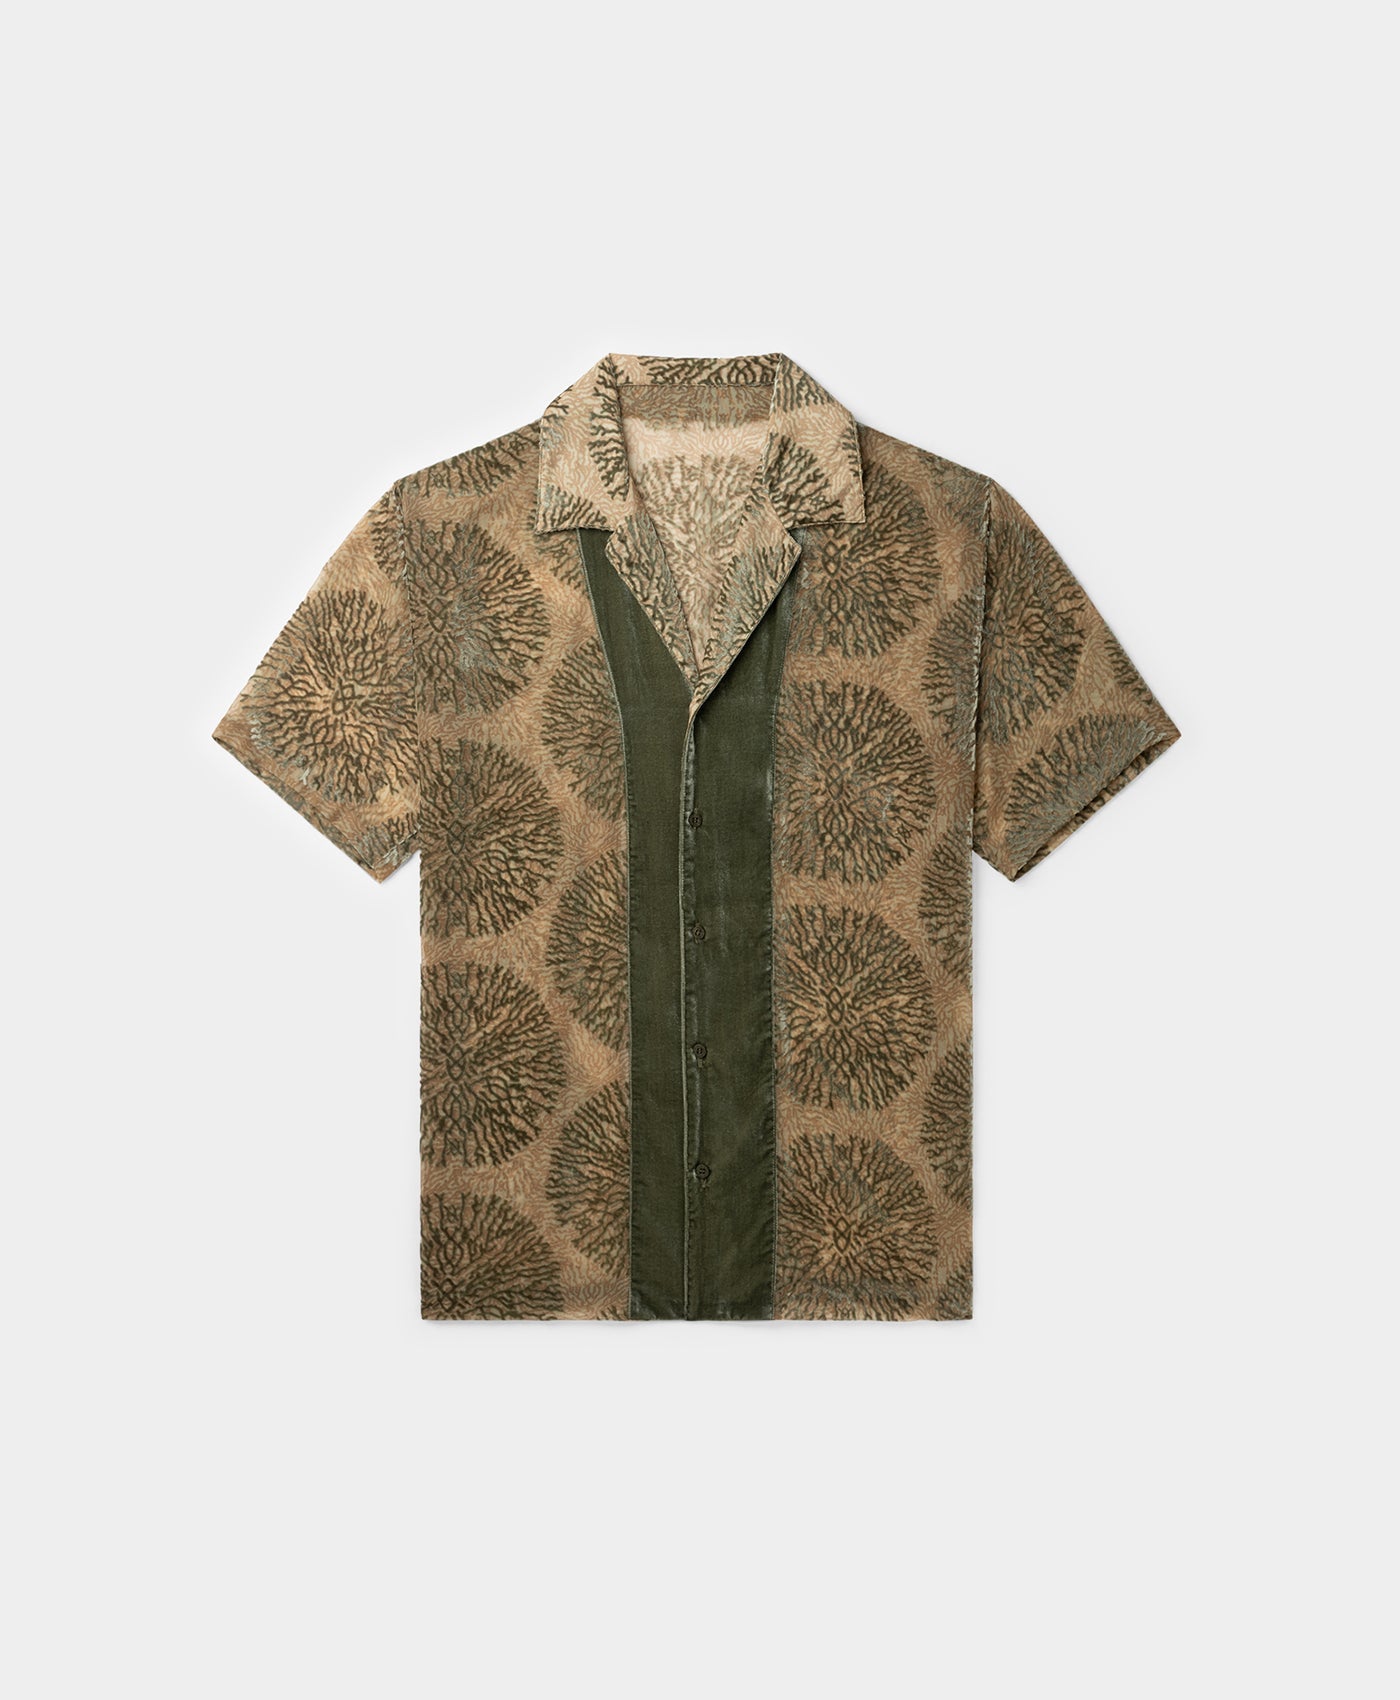 DP - Green Sand Pascal Shirt - Packshot - Front